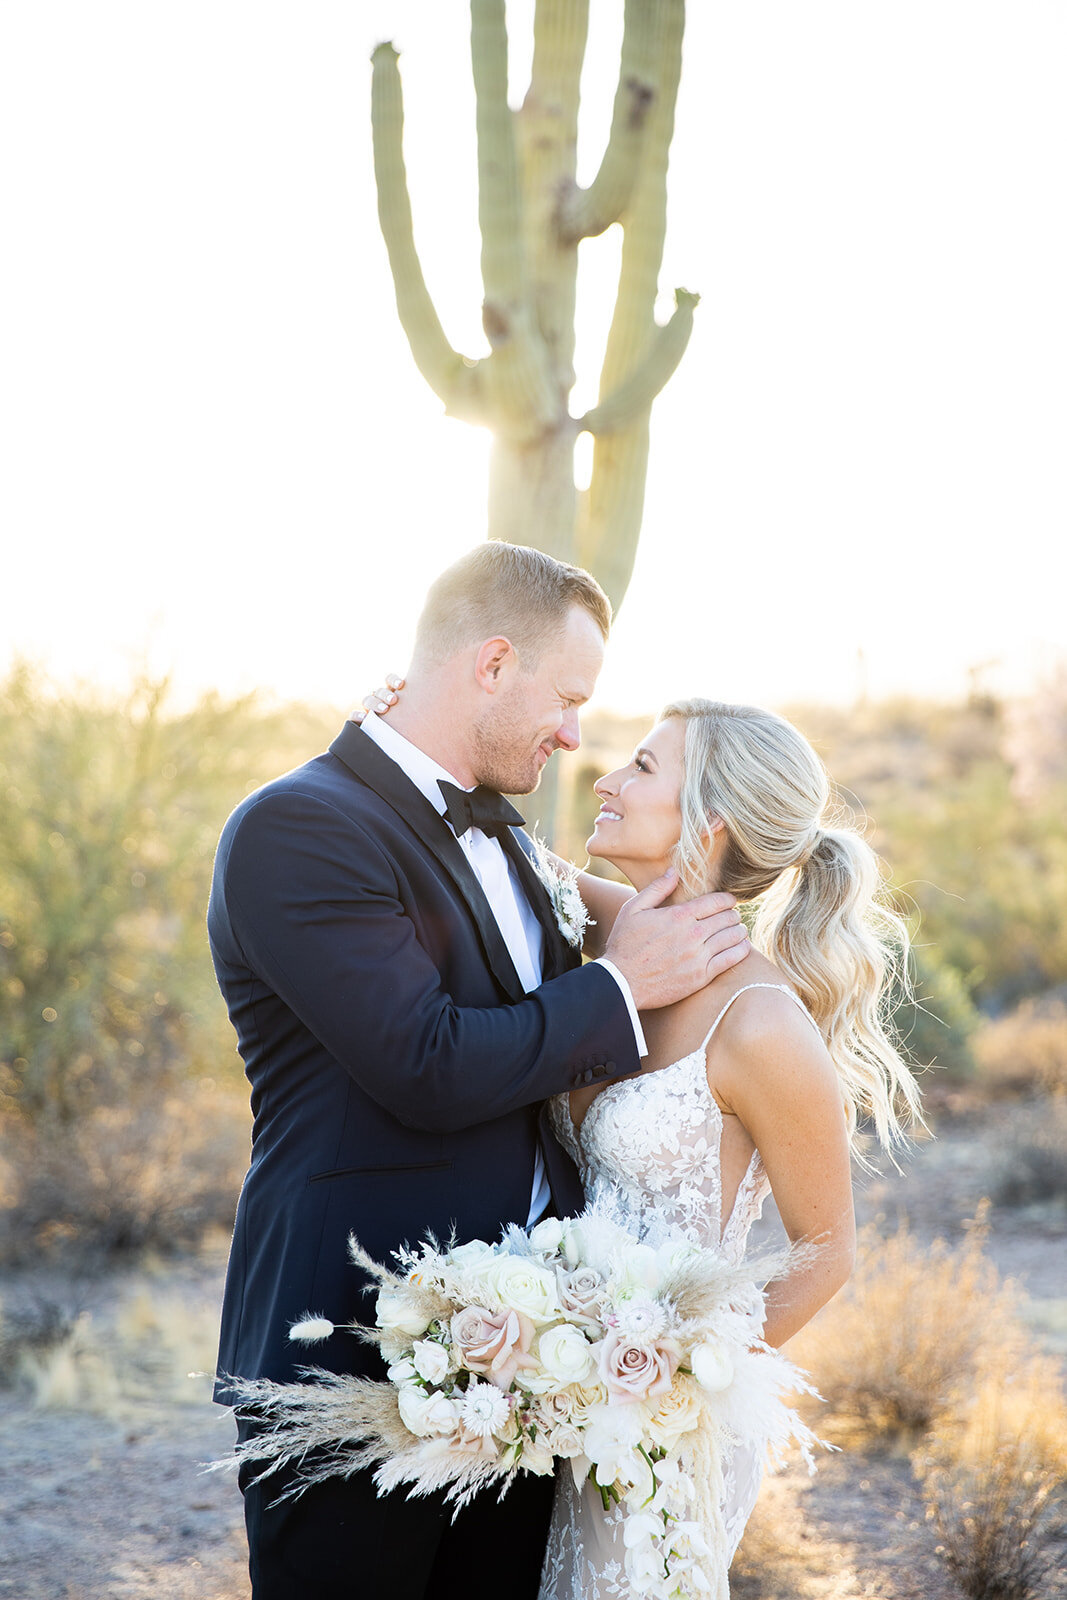 Karlie Colleen Photography - Ashley & Grant Wedding - The Paseo - Phoenix Arizona-752